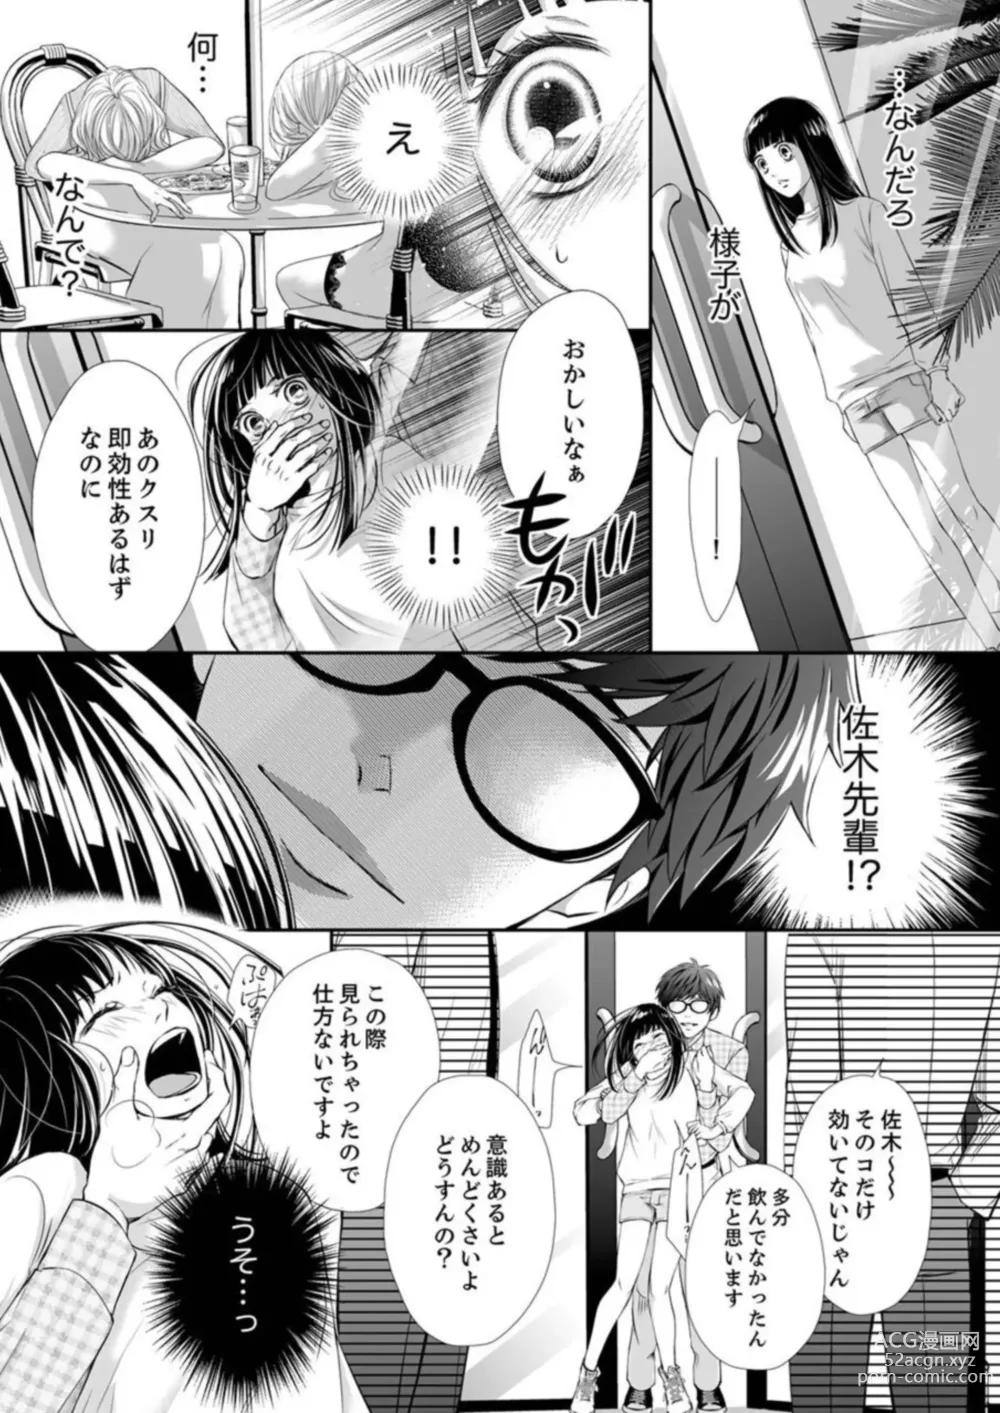 Page 17 of manga Juusei to Aegigoe ~ Uchinuku Tabi ni, Kikasero yo - Gun shot and Panting 1